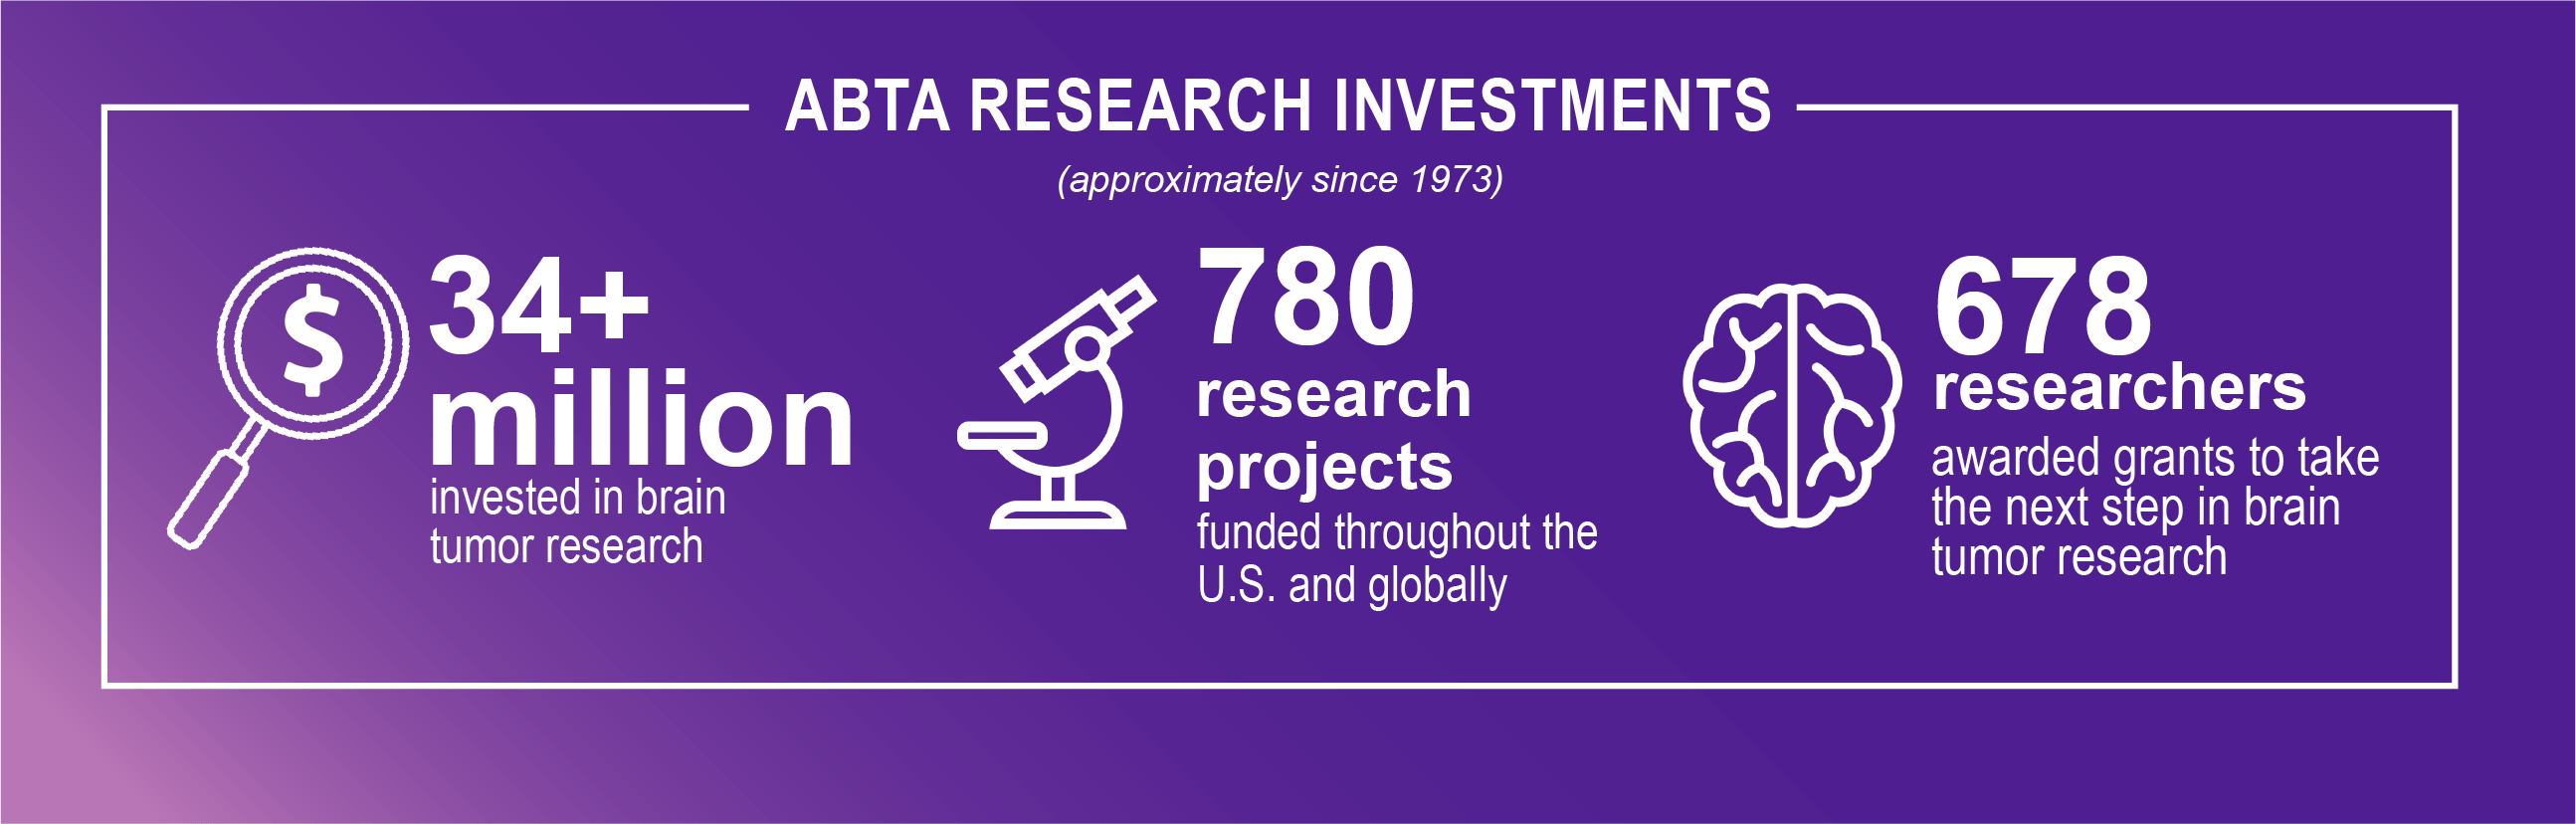 ABTA research investment statistics